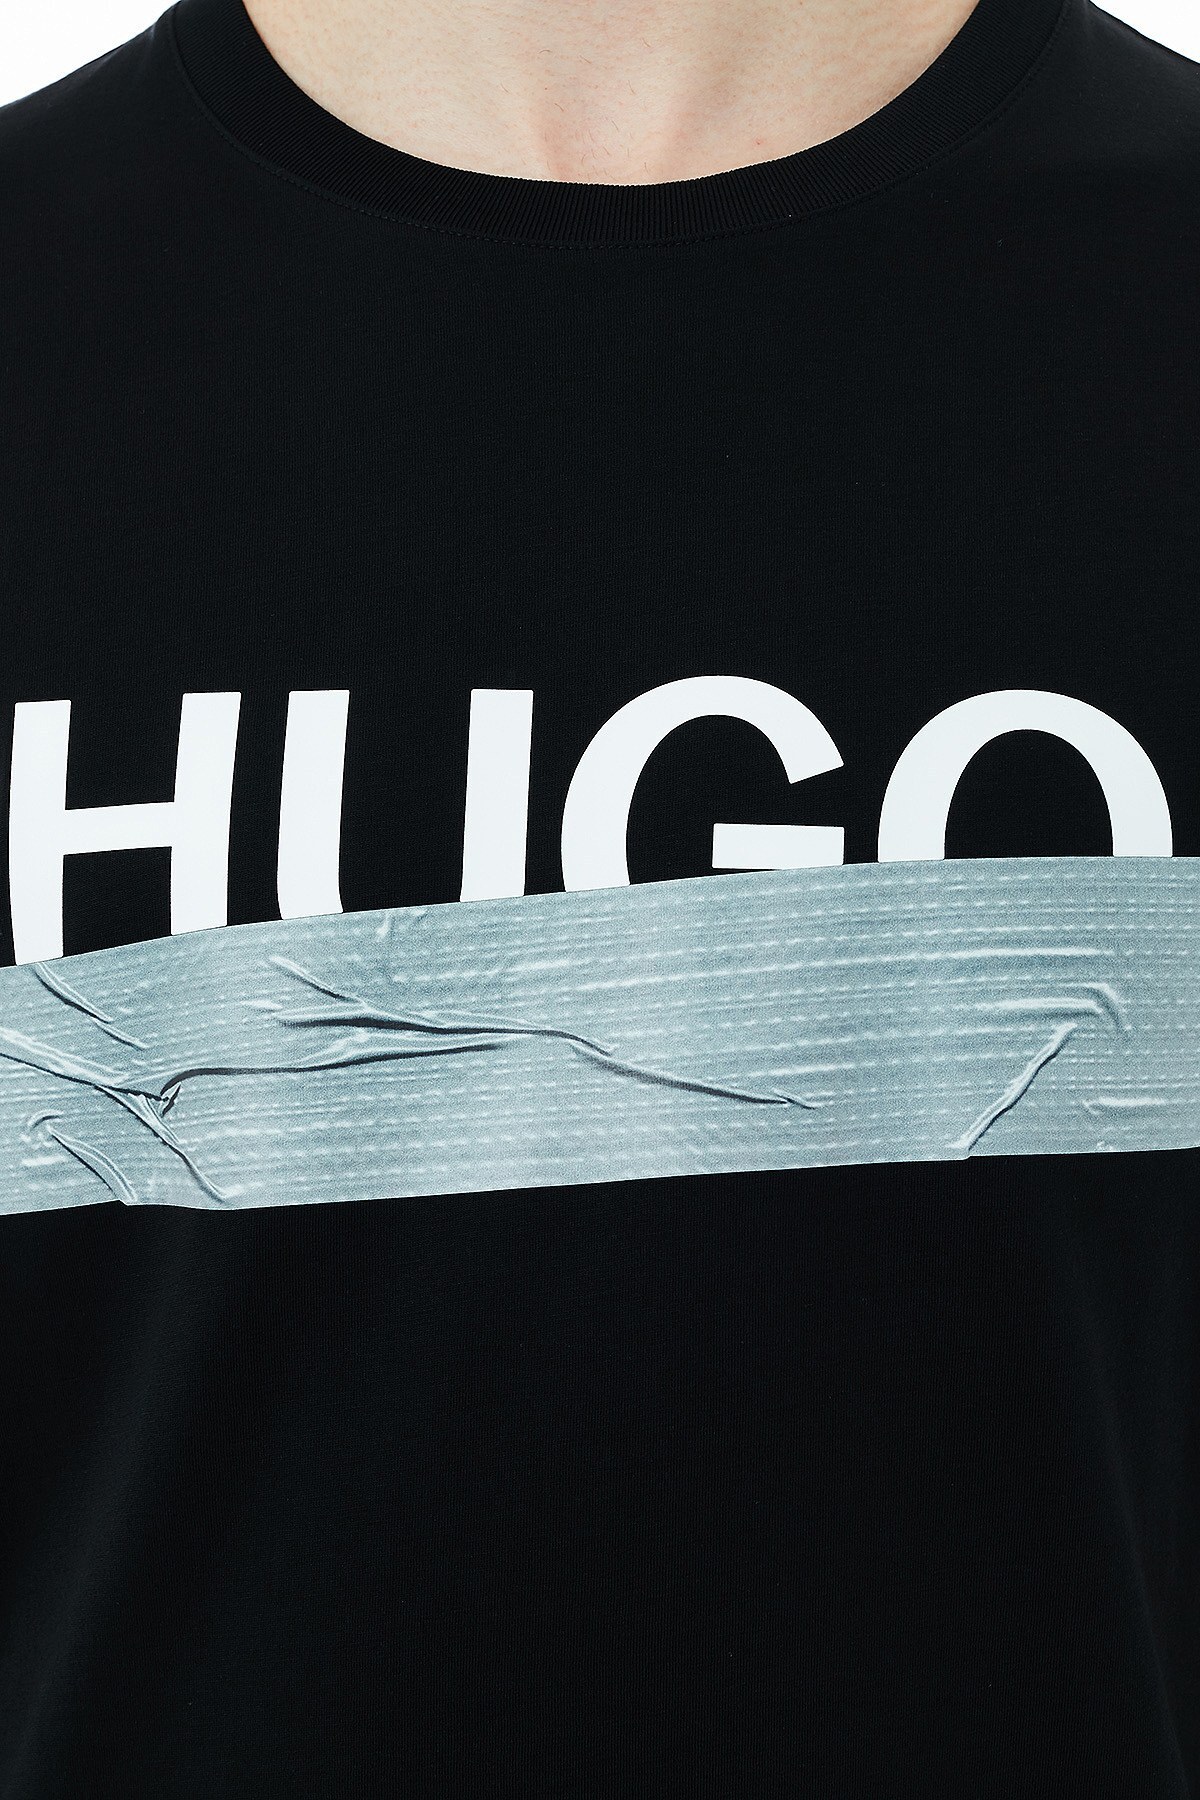 Hugo Boss Regular Fit Baskılı Bisiklet Yaka % 100 Pamuk Erkek T Shirt 50436413 001 SİYAH